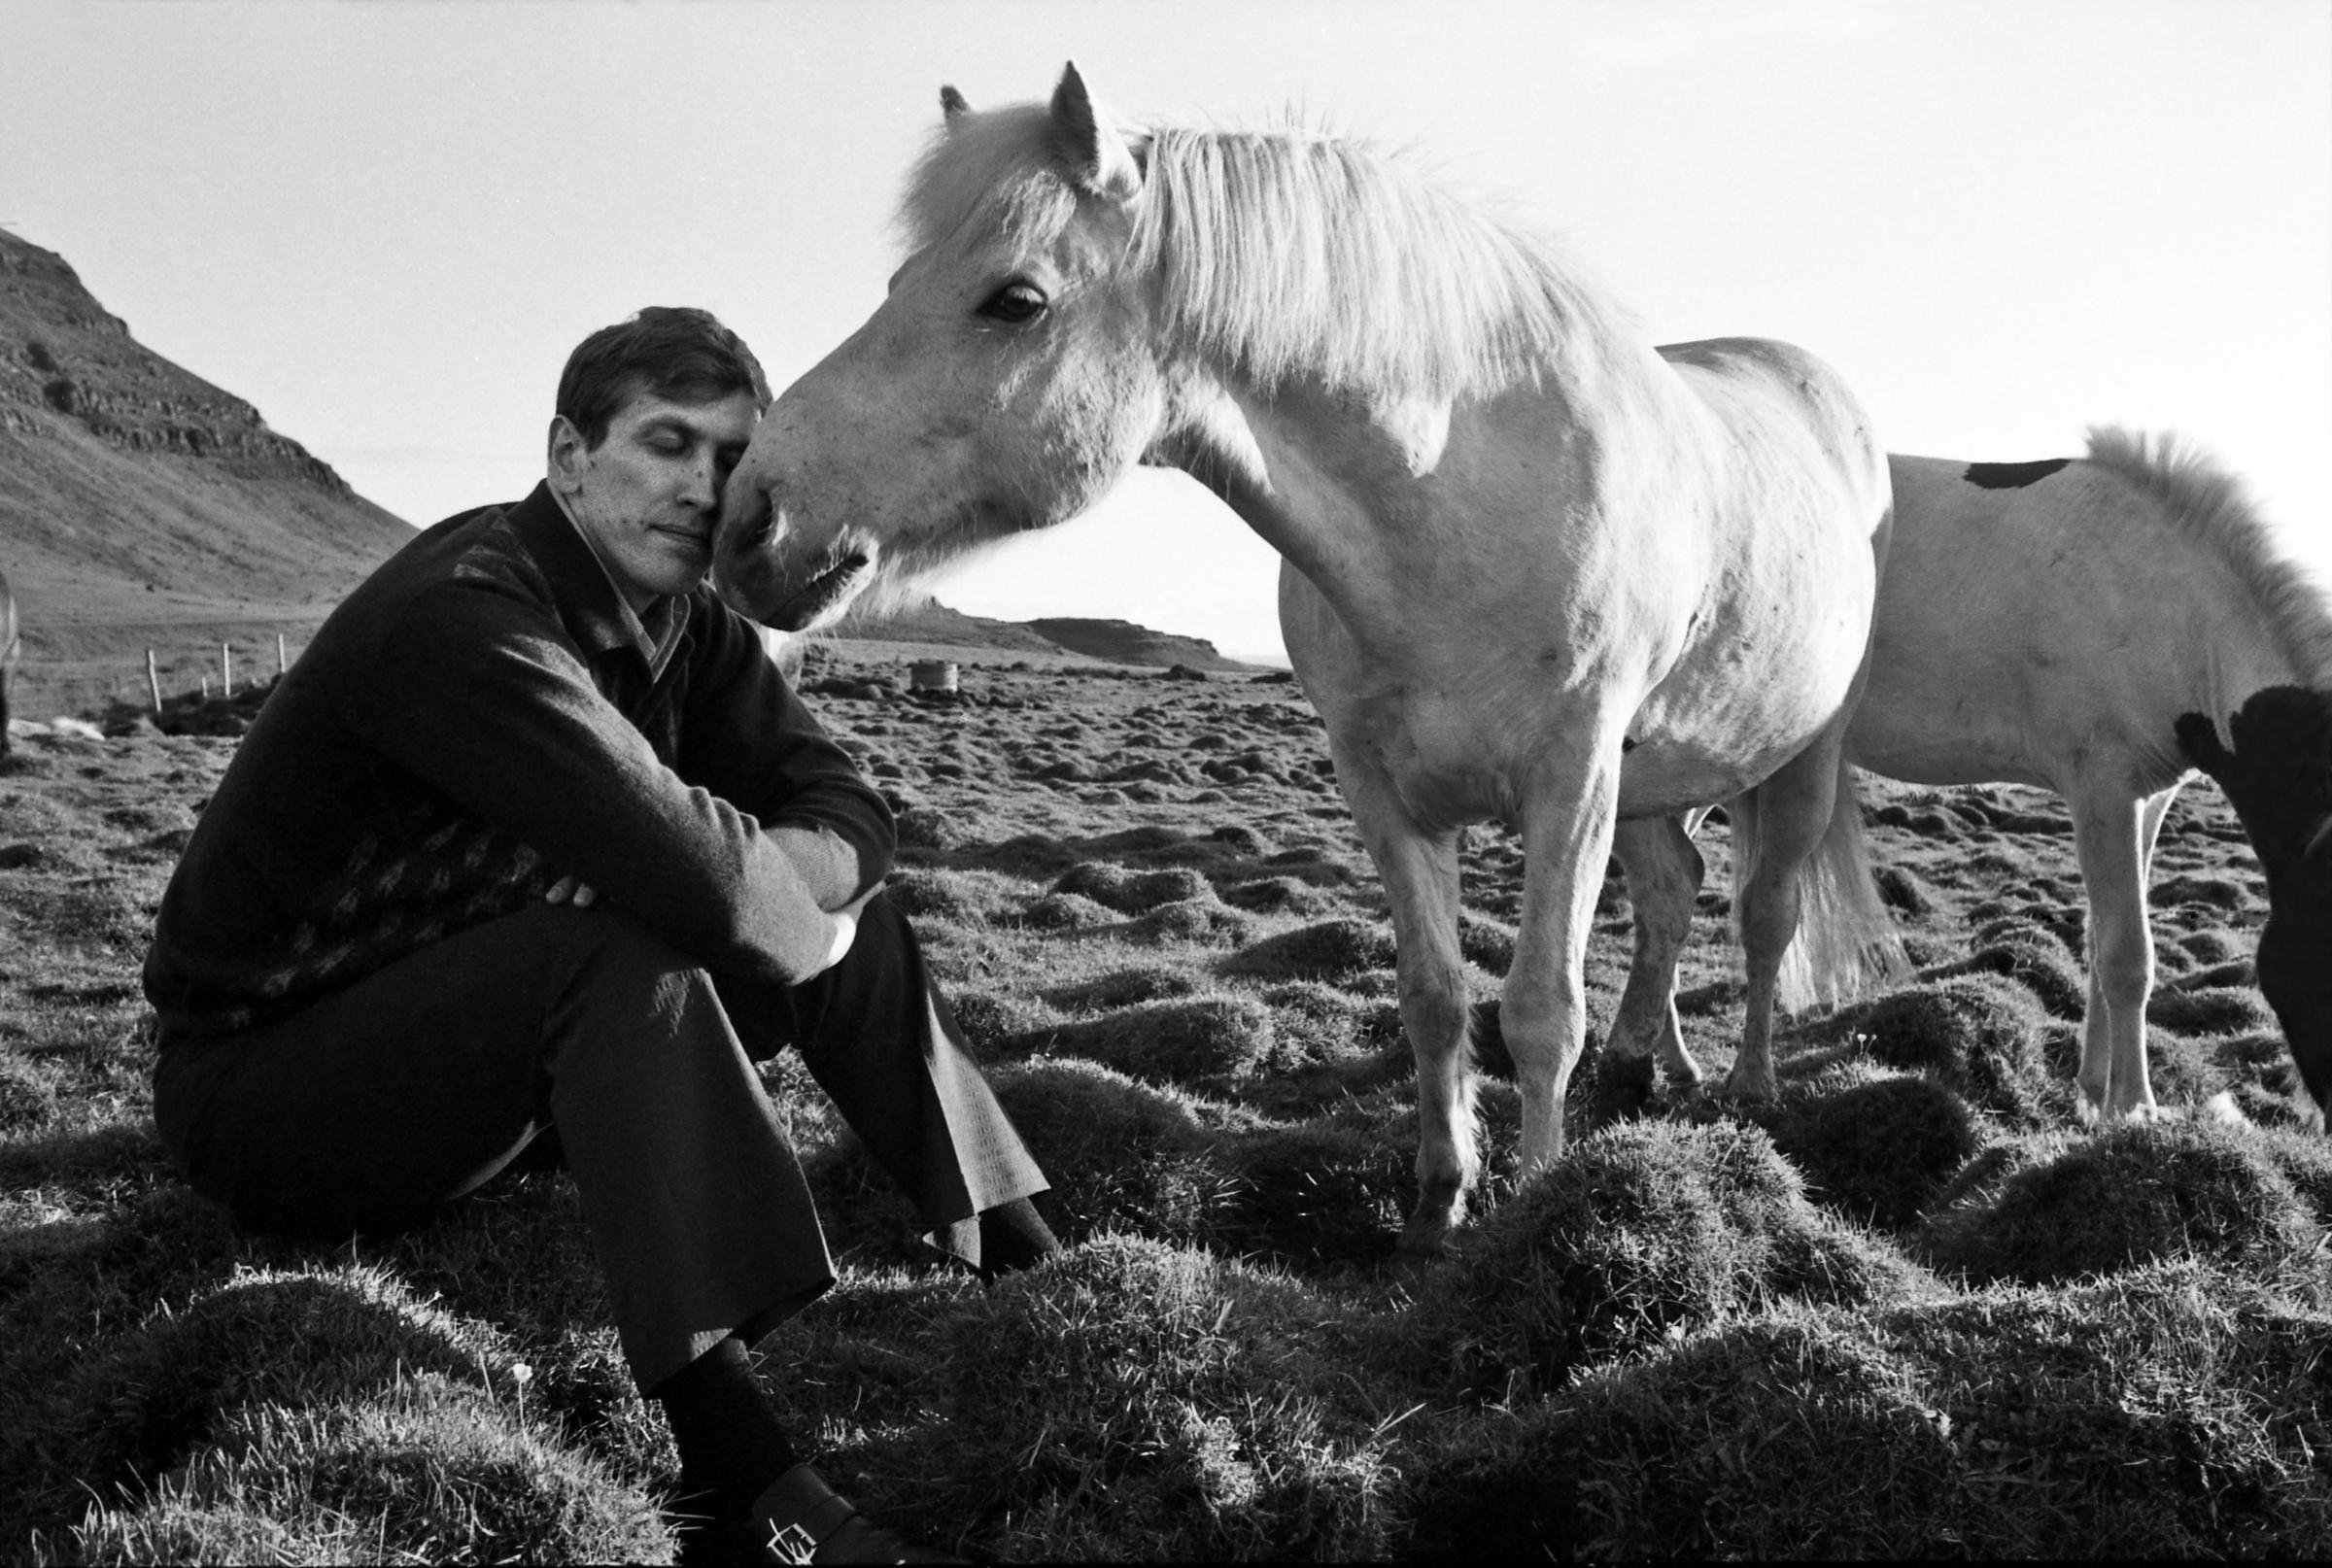 Bobby Fischer with horse in Reykjavik, Iceland, 1972.